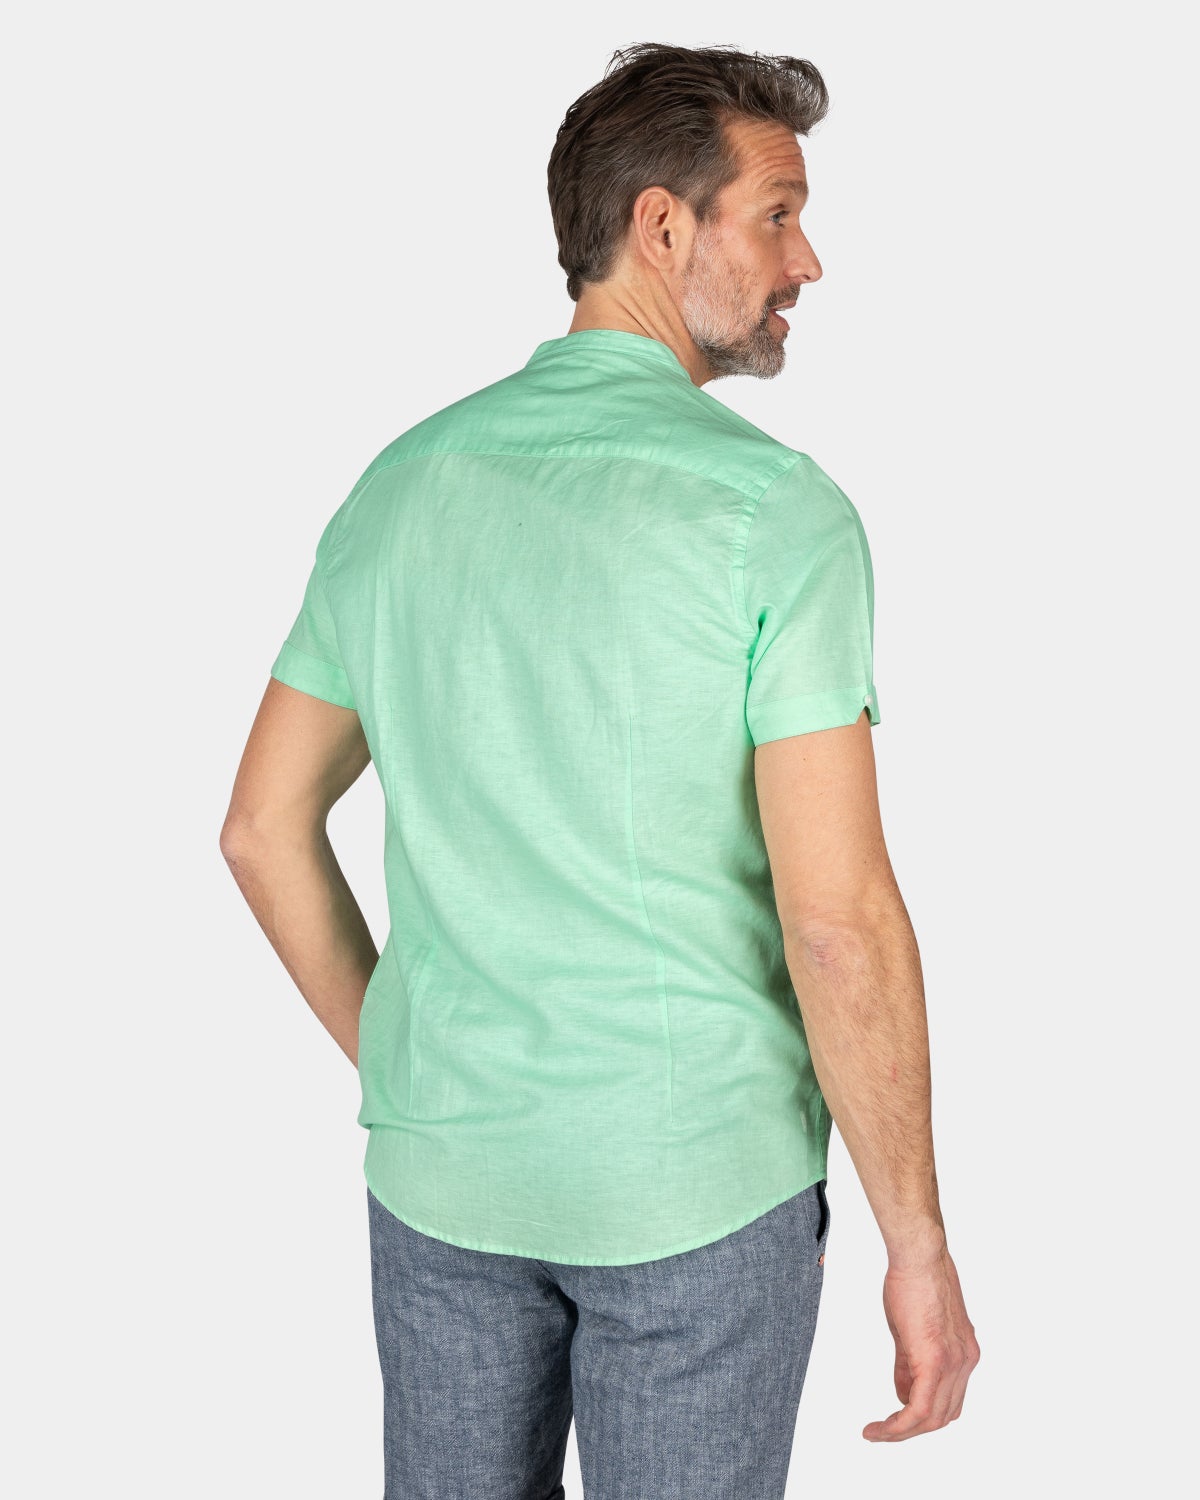 Collarless shirt with short sleeves - Teal Green